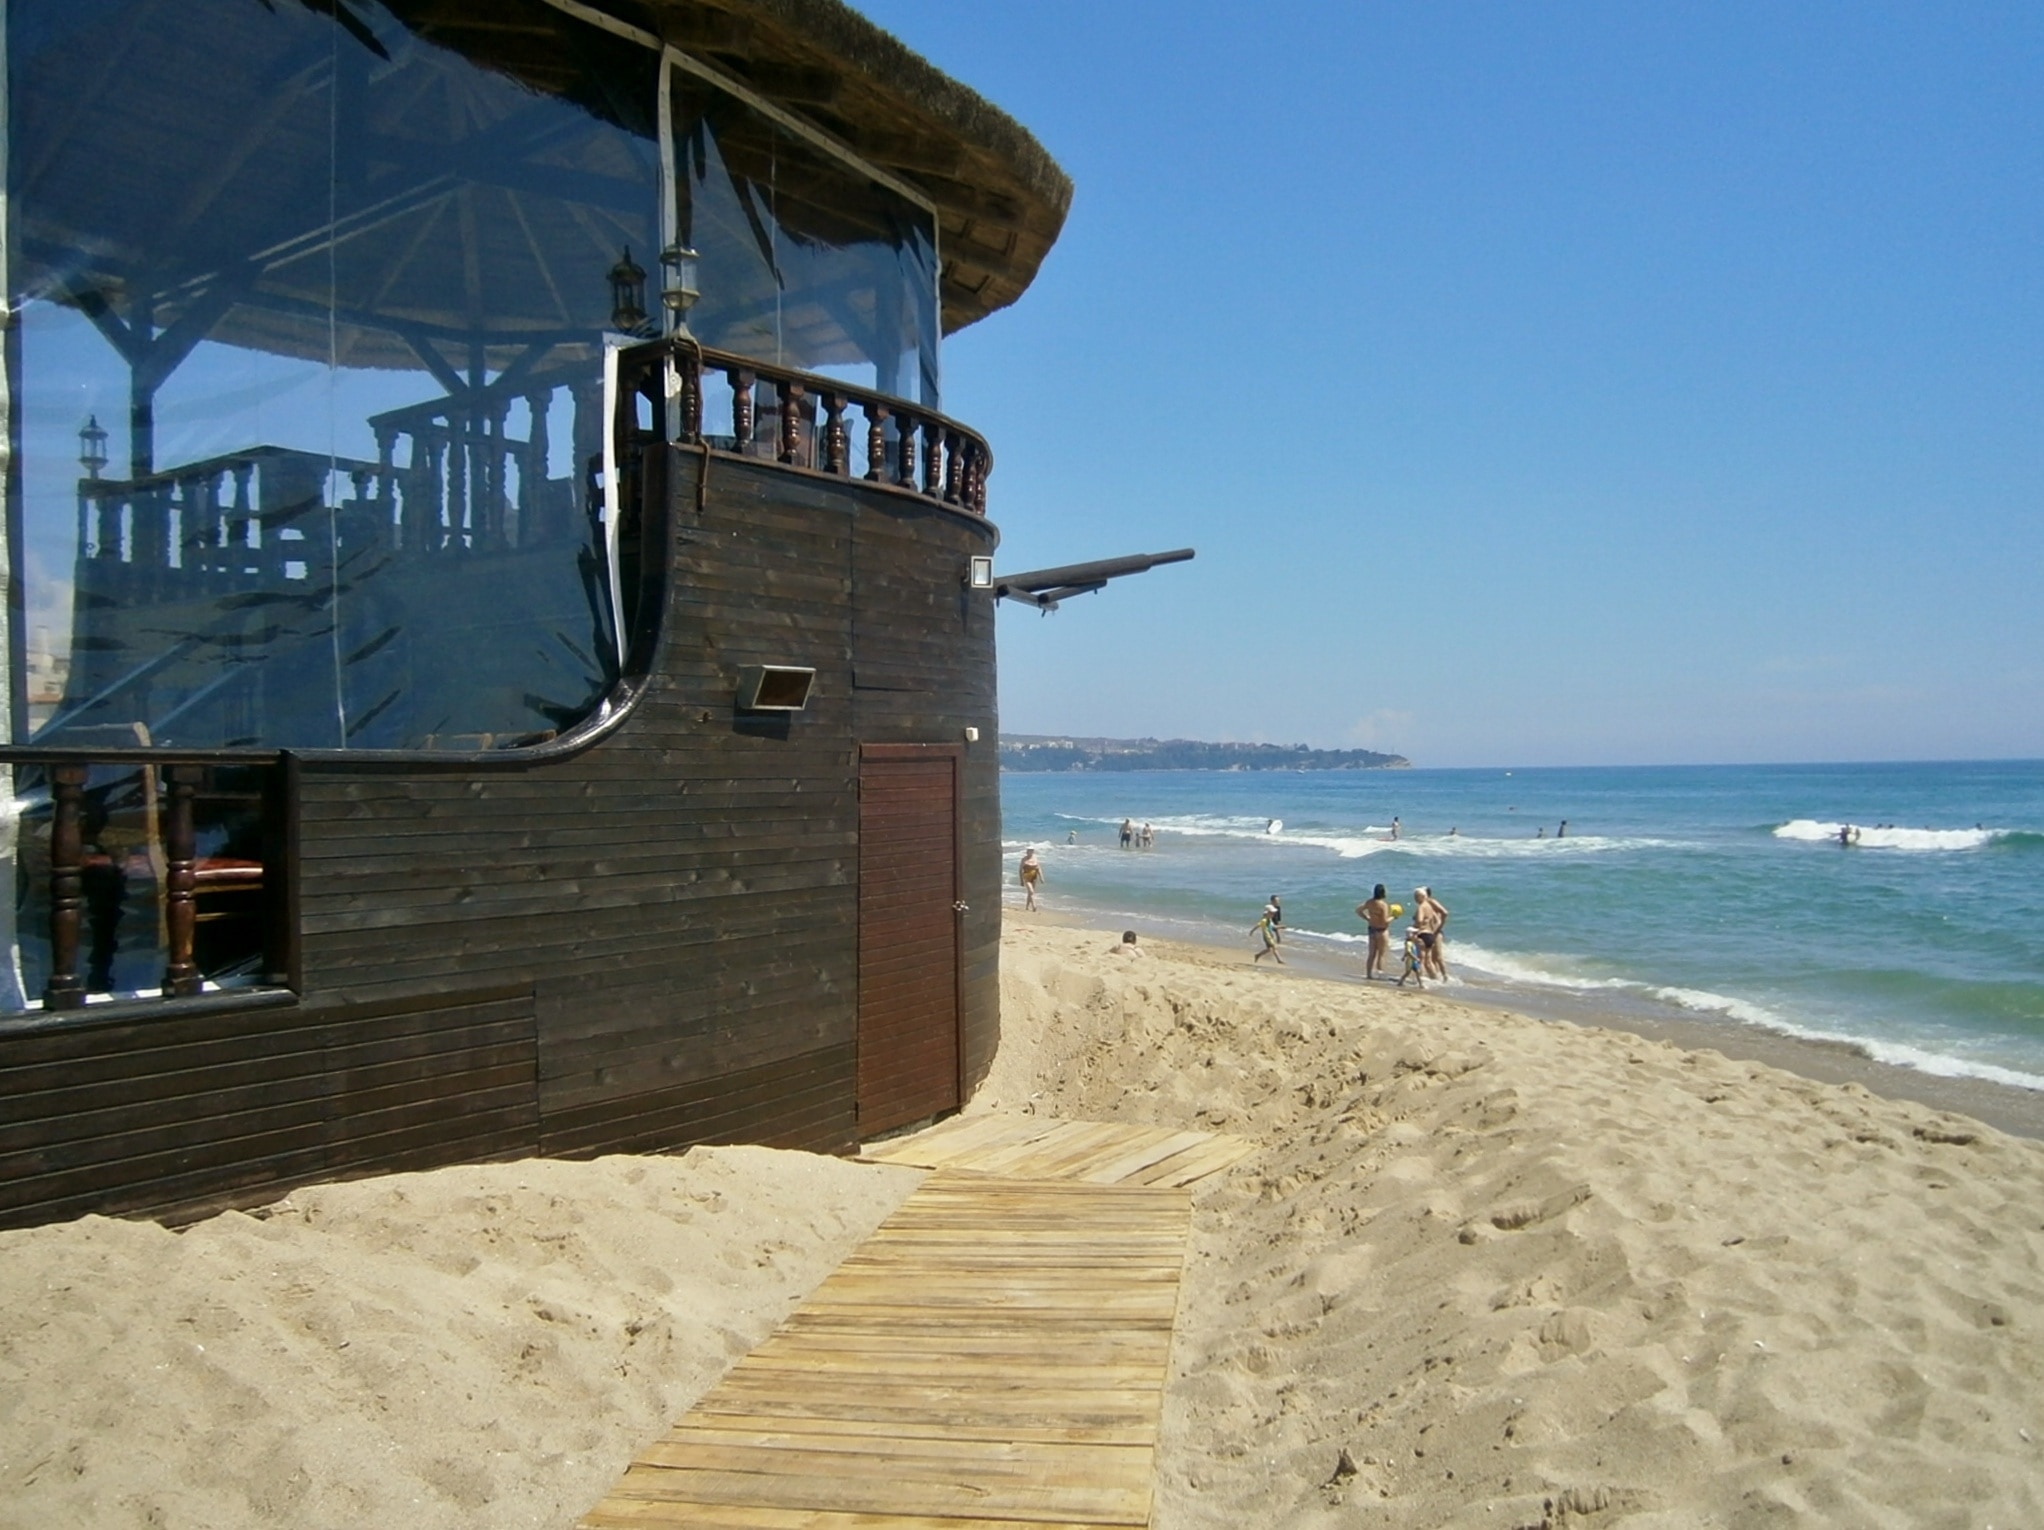 brown wooden restaurant near body of water during daytime